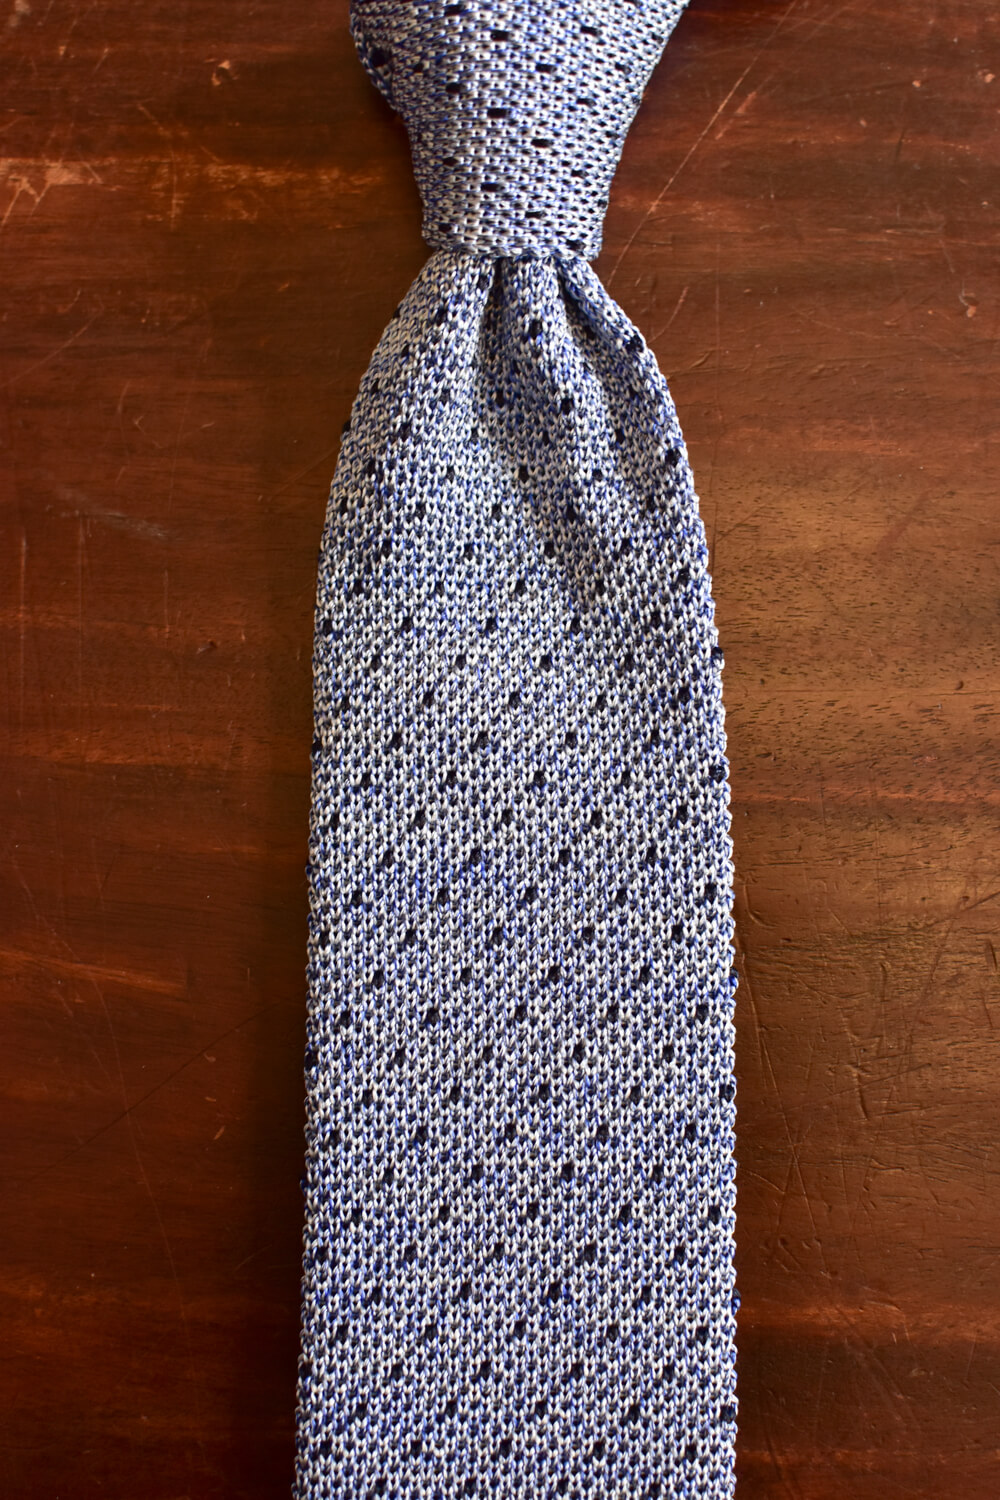 Cravate tricot bleu chine à pois